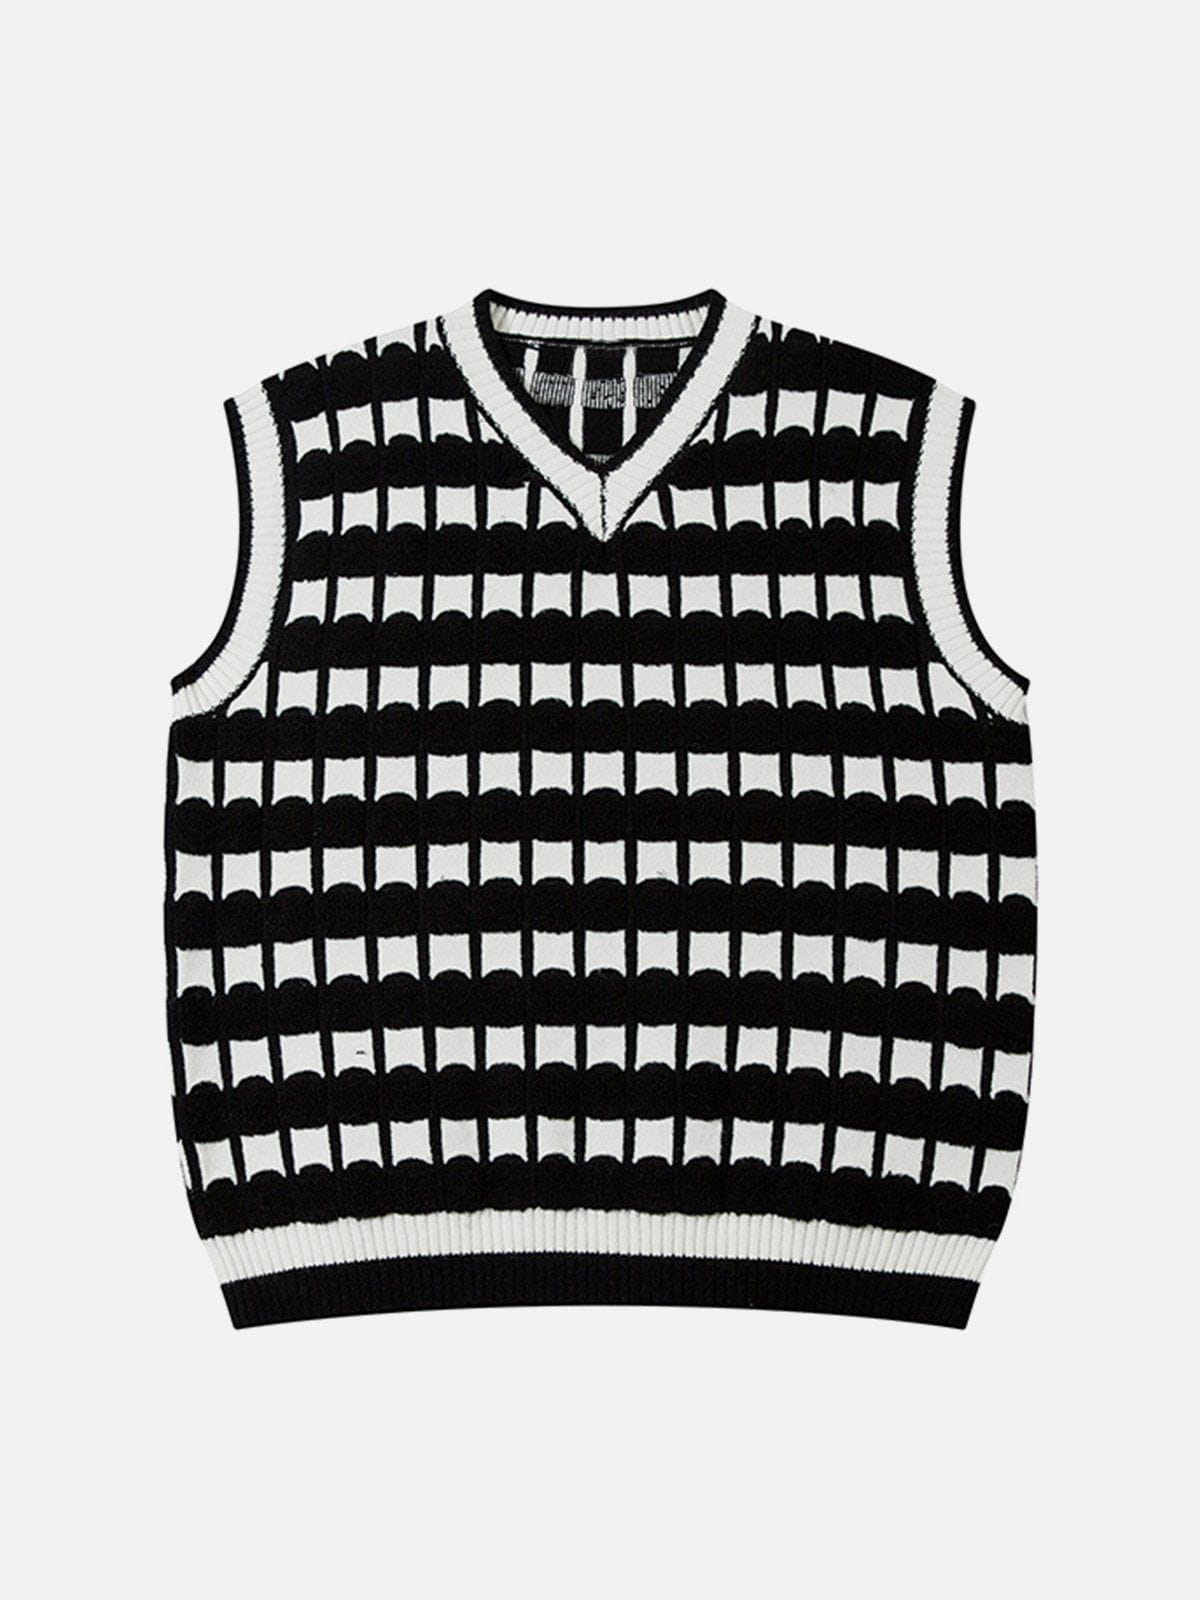 Majesda® - Plaid Stripe Sweater Vest outfit ideas streetwear fashion